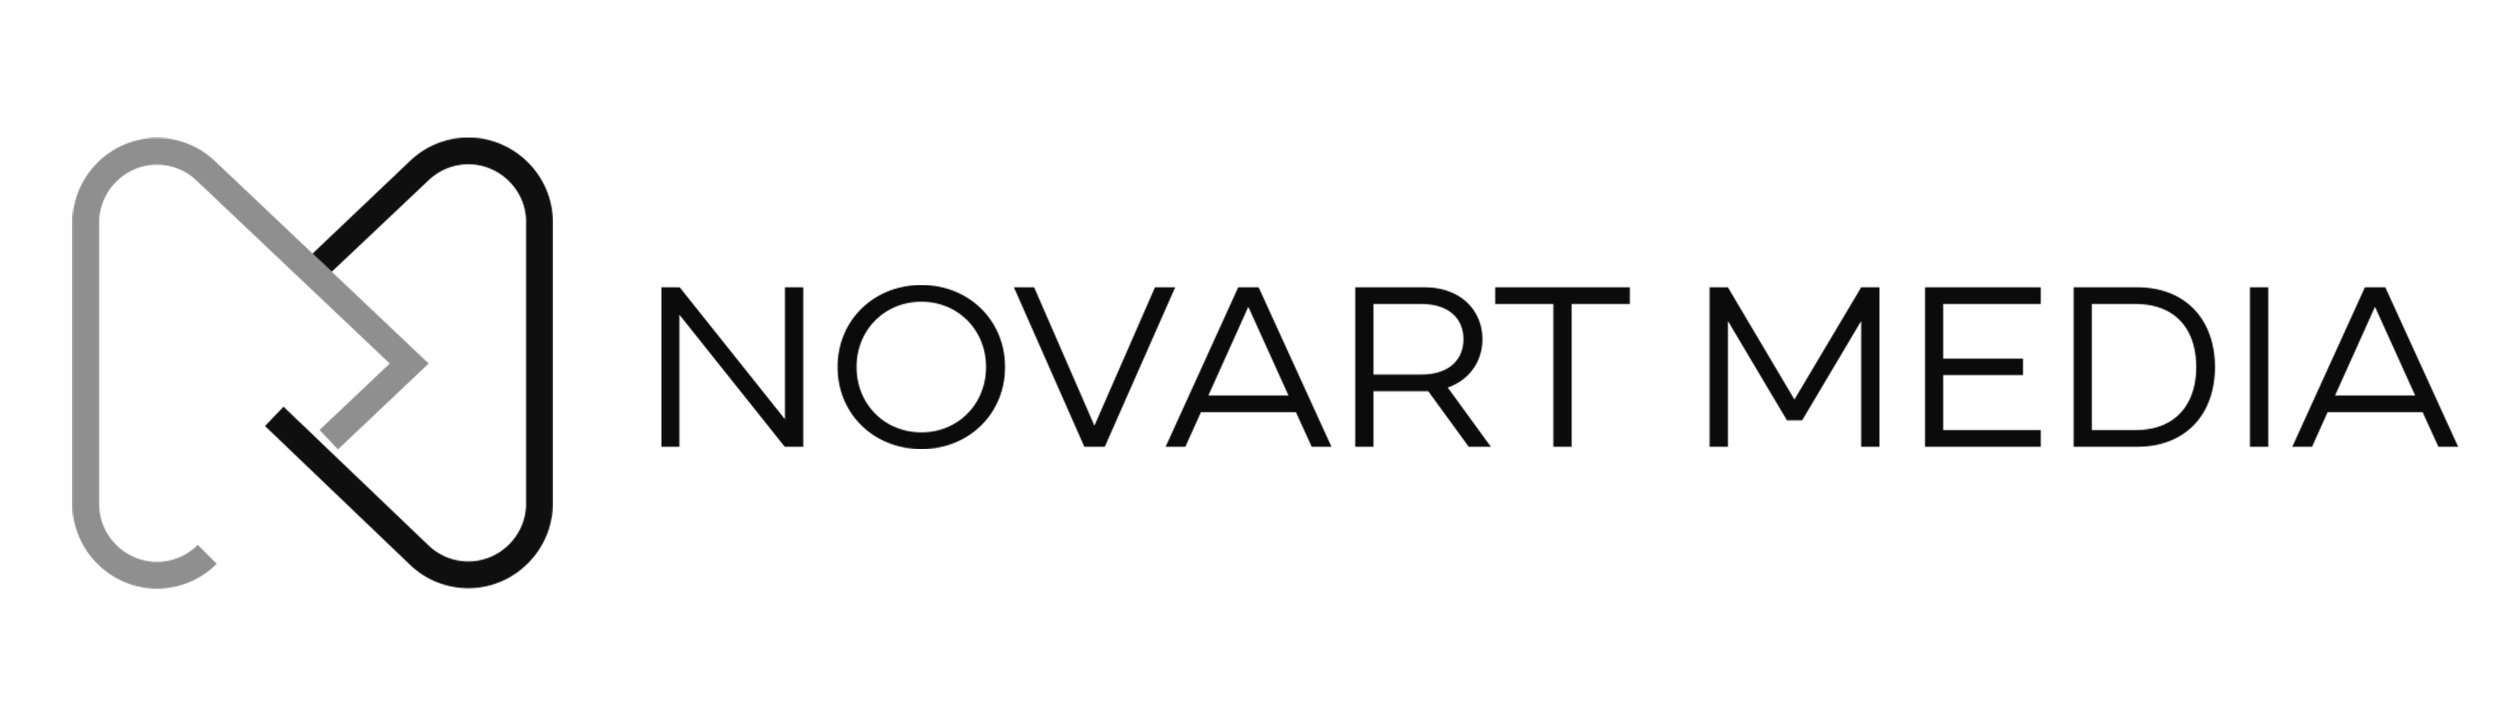 Novart+Media+logo+HORZ.jpg